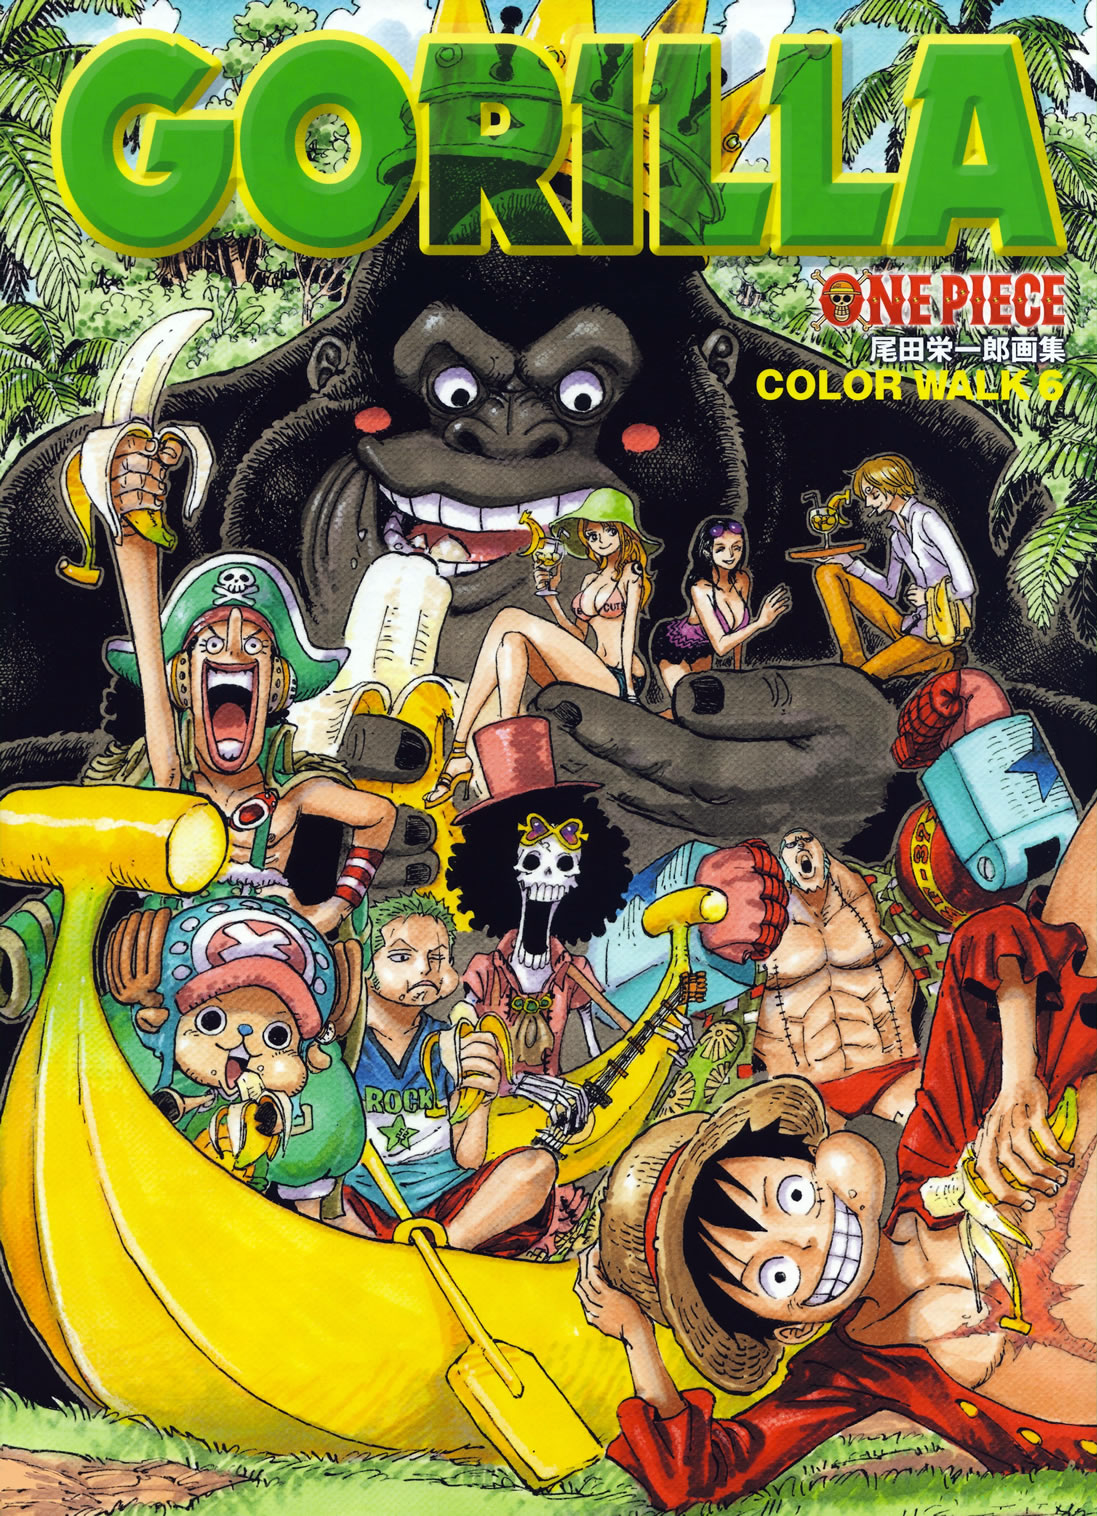 One Piece Jump Comics Color Walk 3 Lion Art Book Collectibles Manga